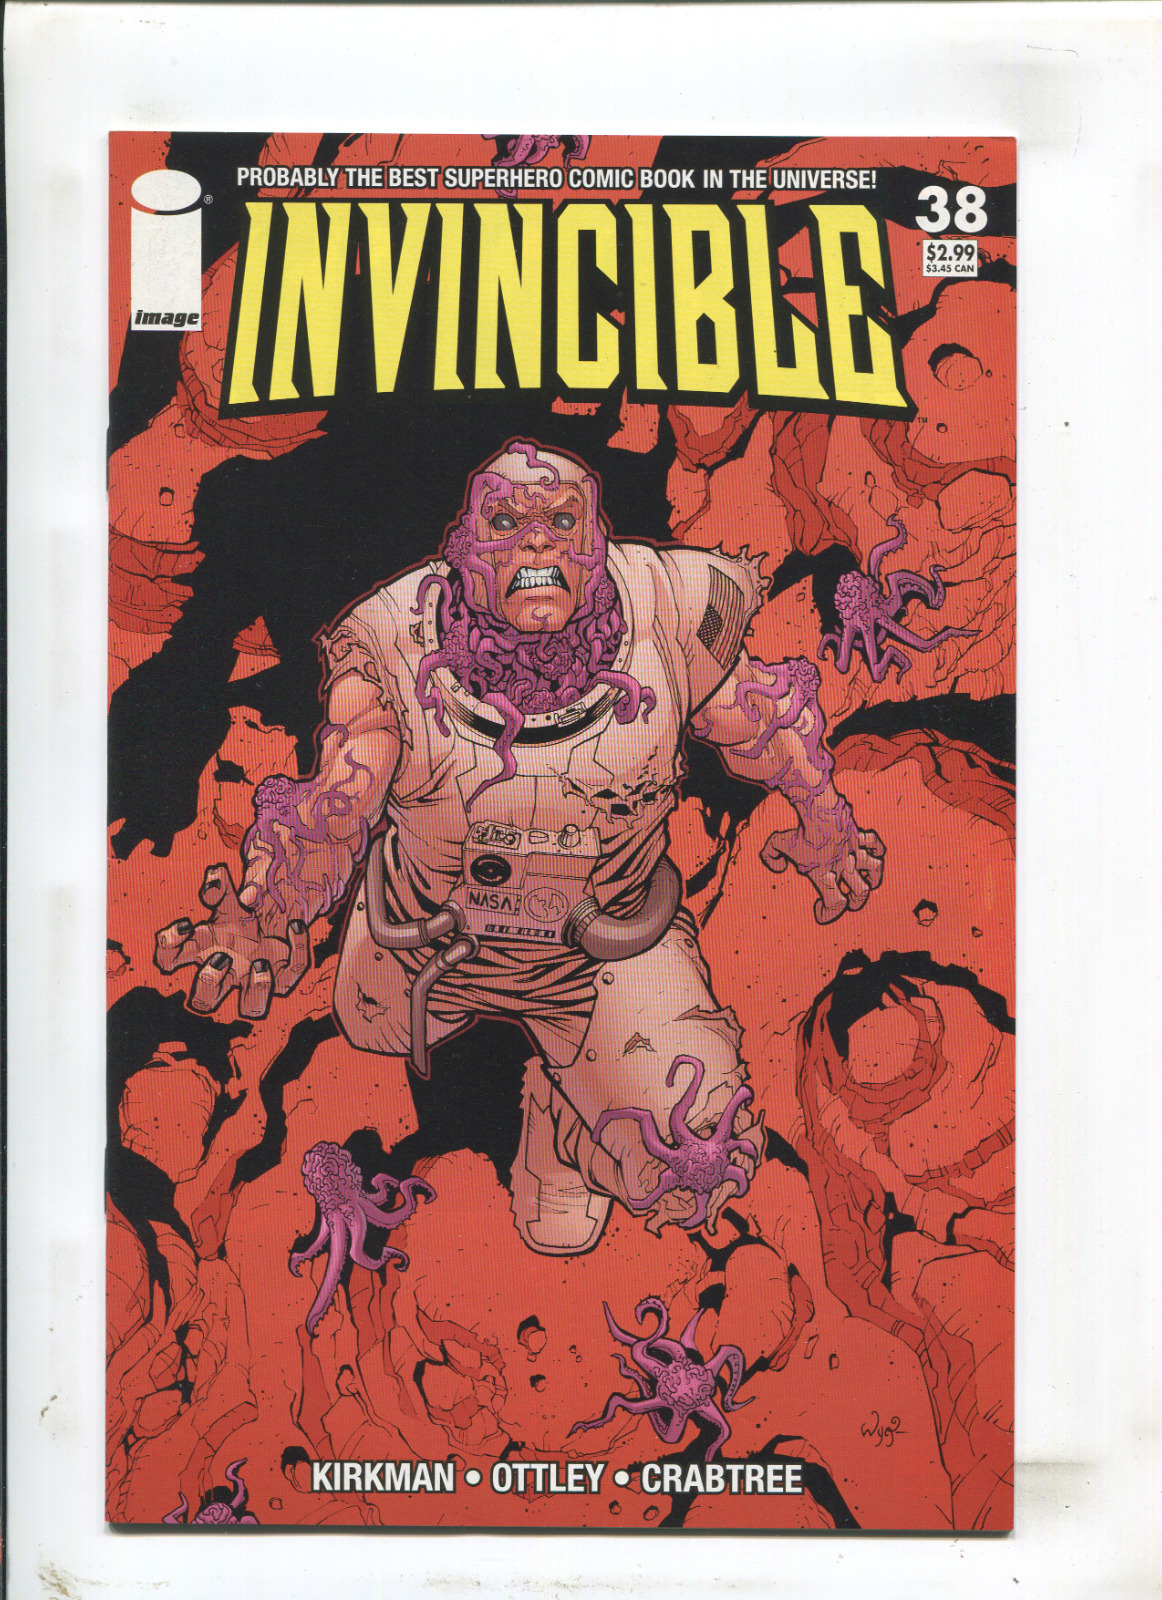 Invincible #82 - Ryan Ottley Cover & ART (8.5) 2011  Comic Books - Modern  Age, Image Comics, Invincible, Superhero / HipComic